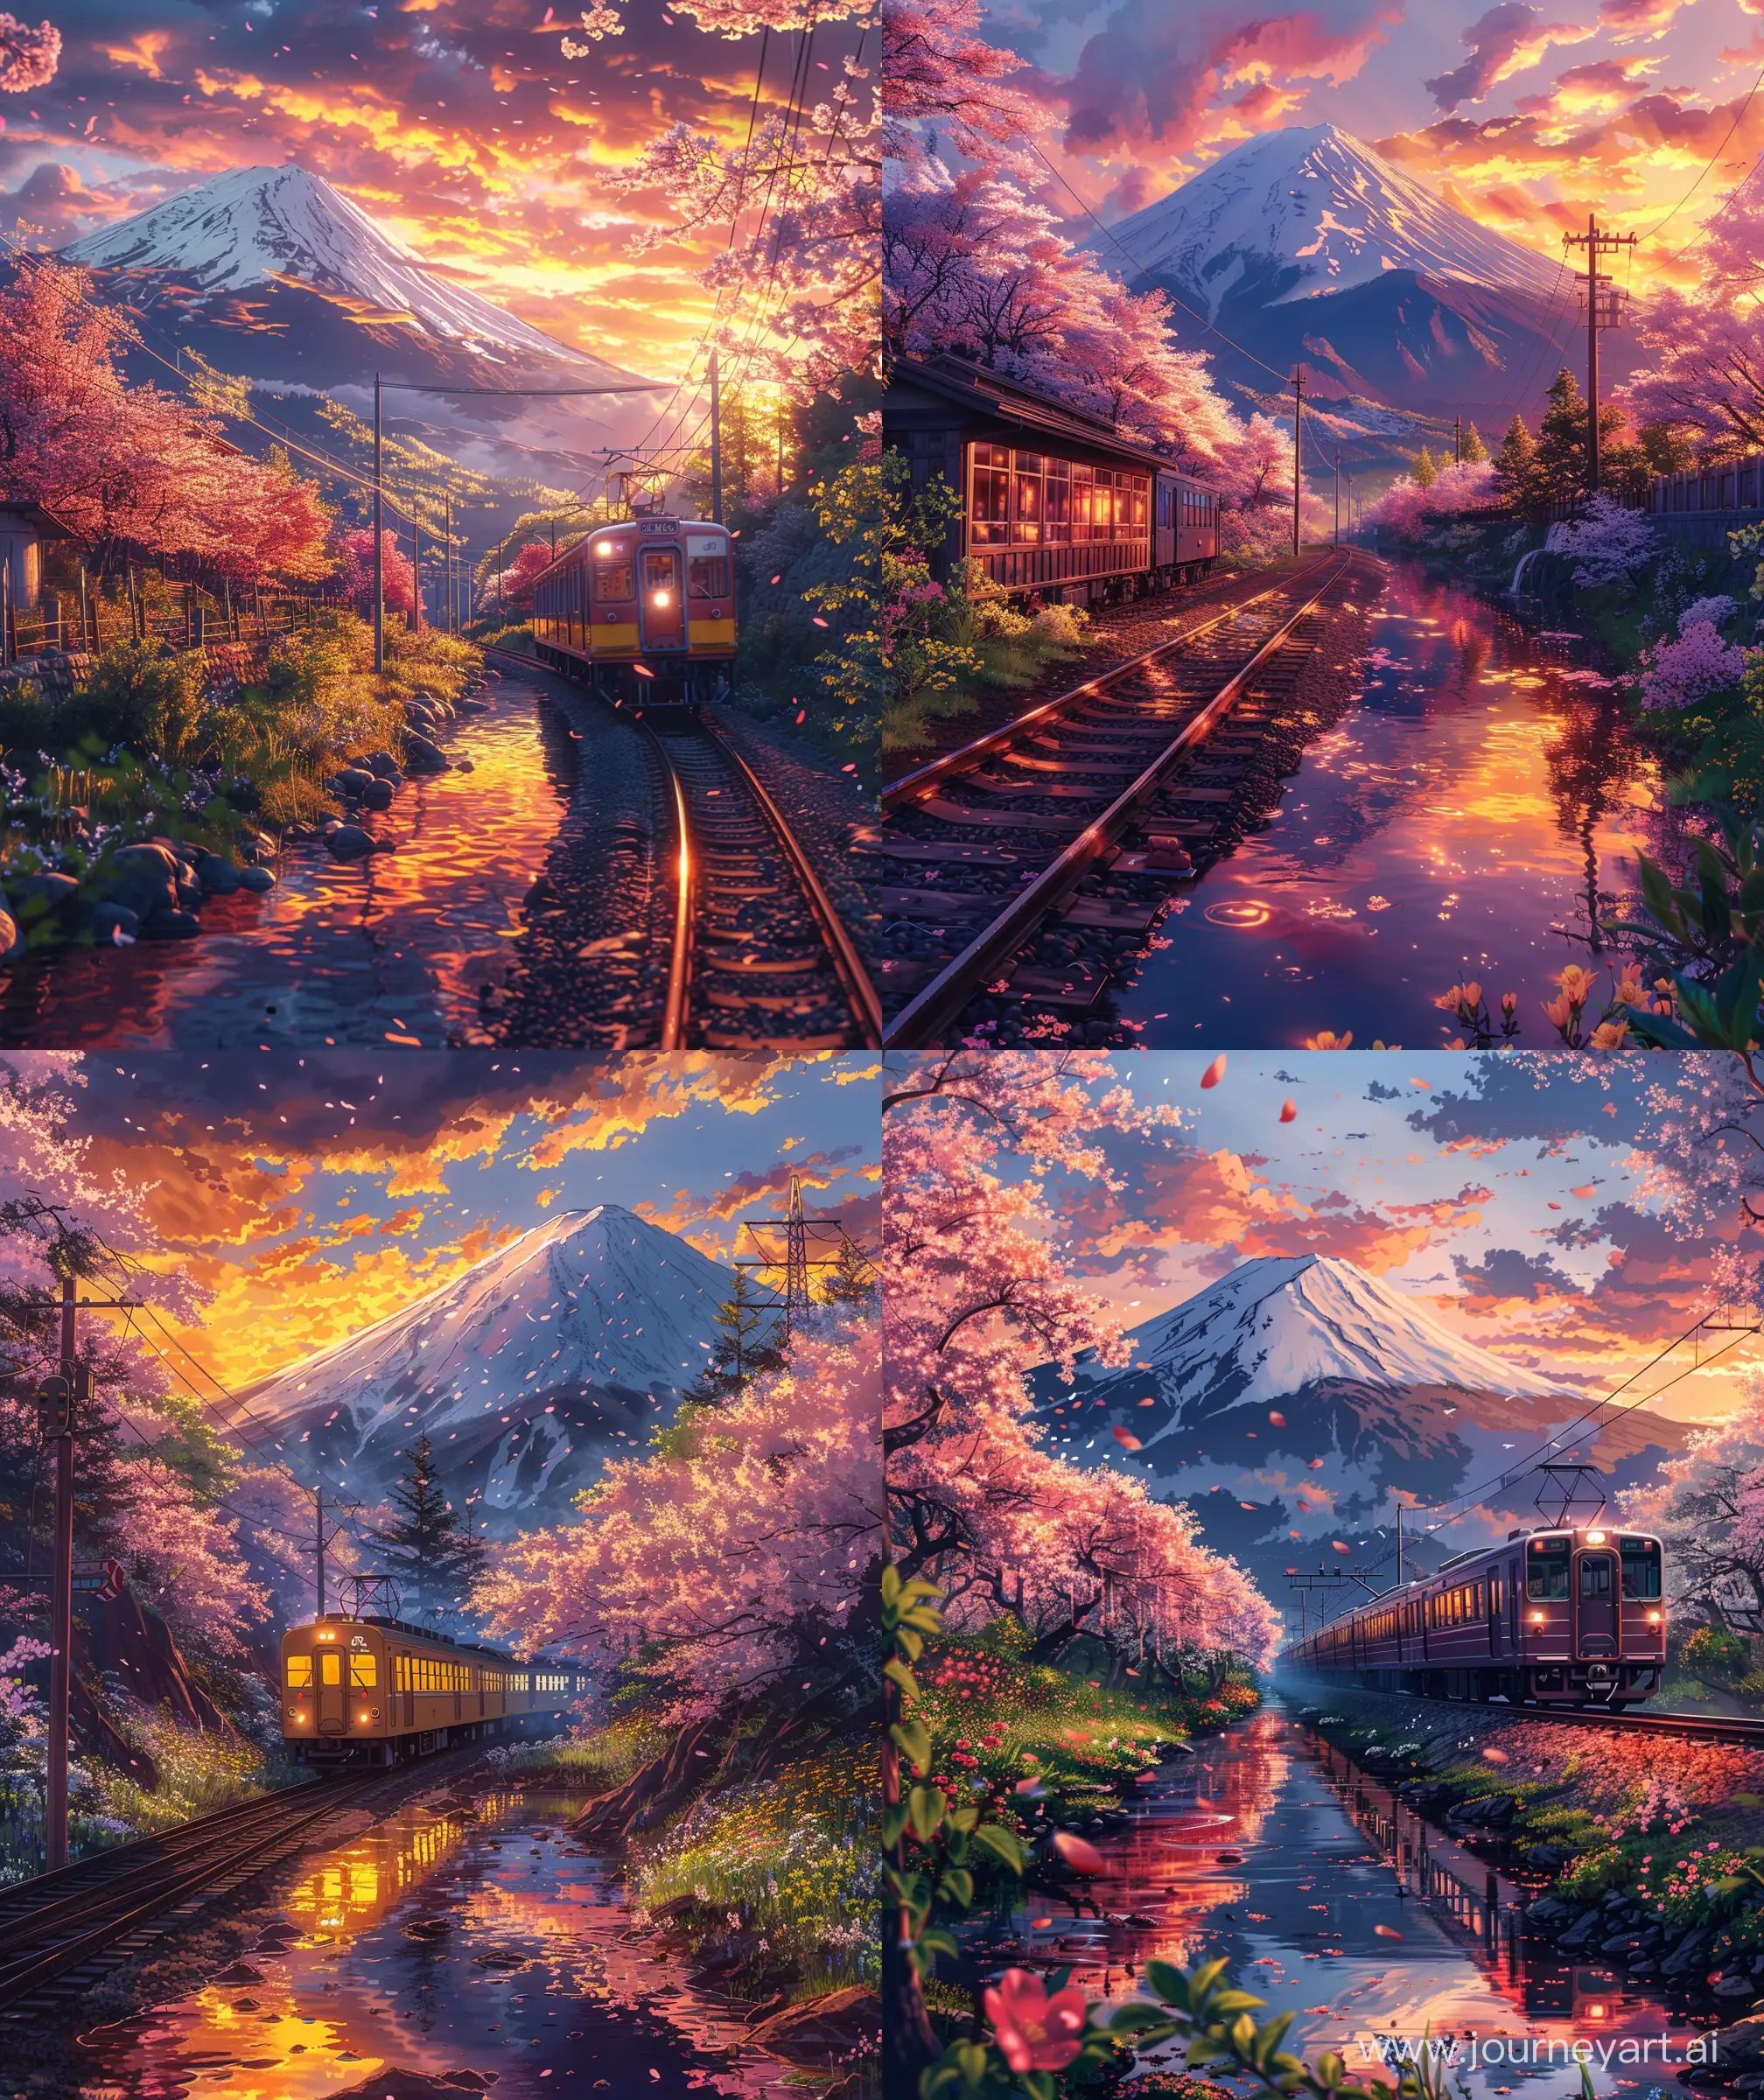 Scenic-Anime-Illustration-Mountain-Train-Journey-Amid-Cherry-Blossoms